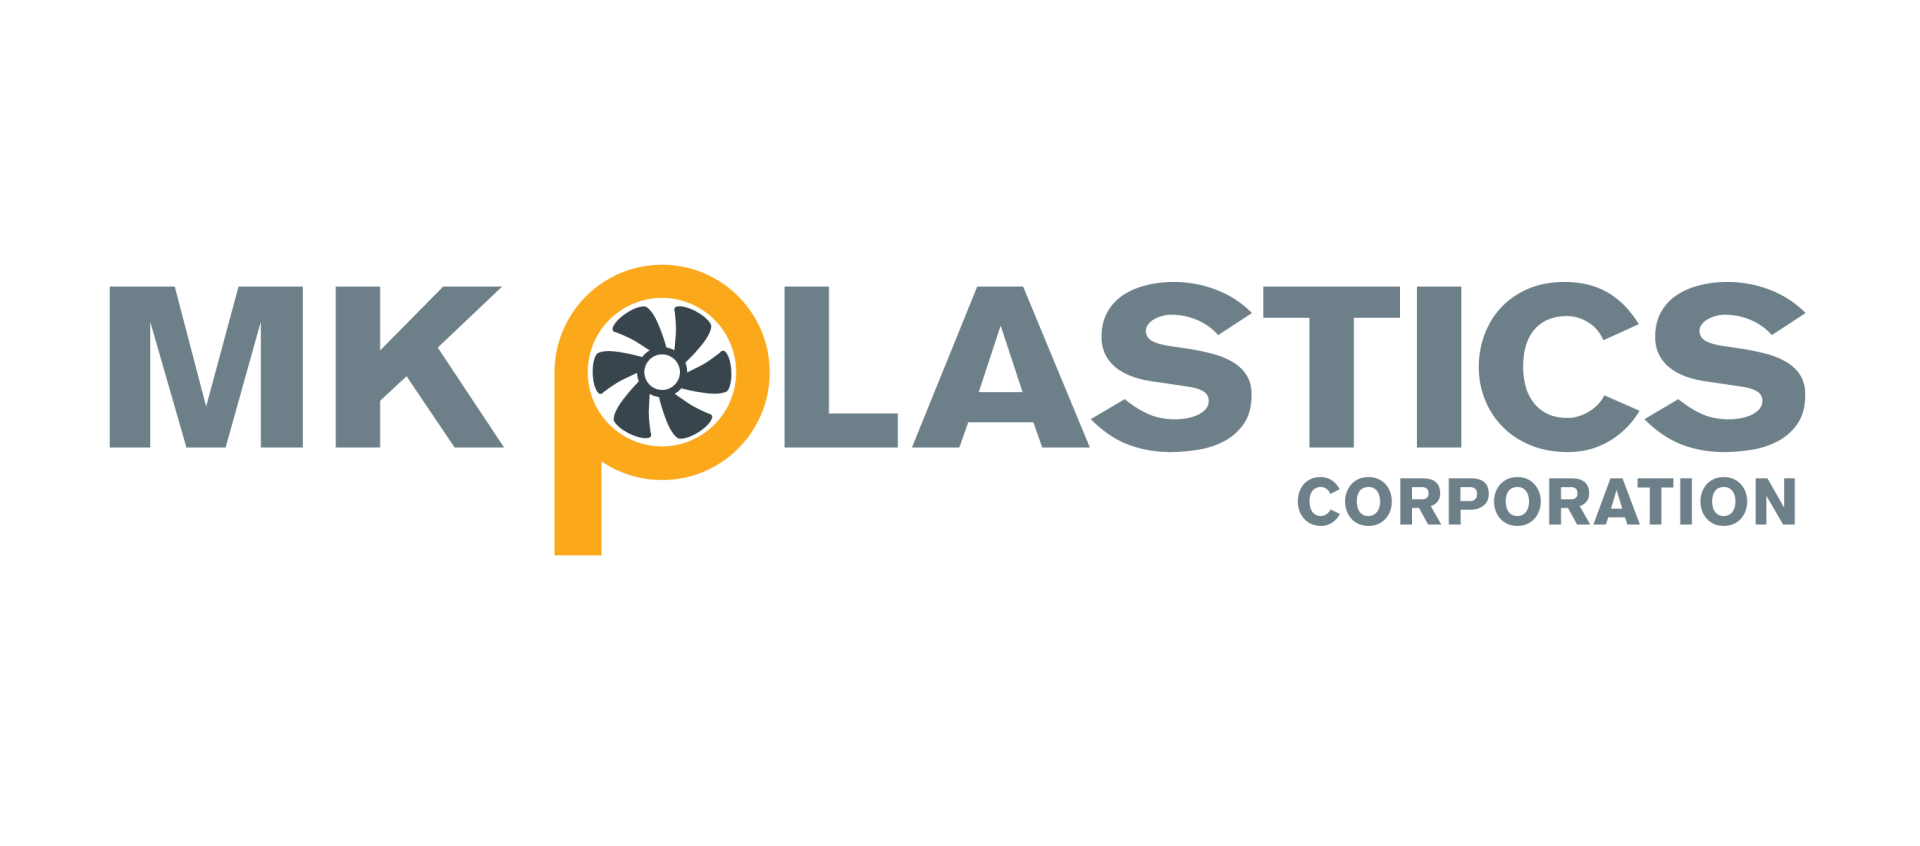 MK Plastics Corporation Logo